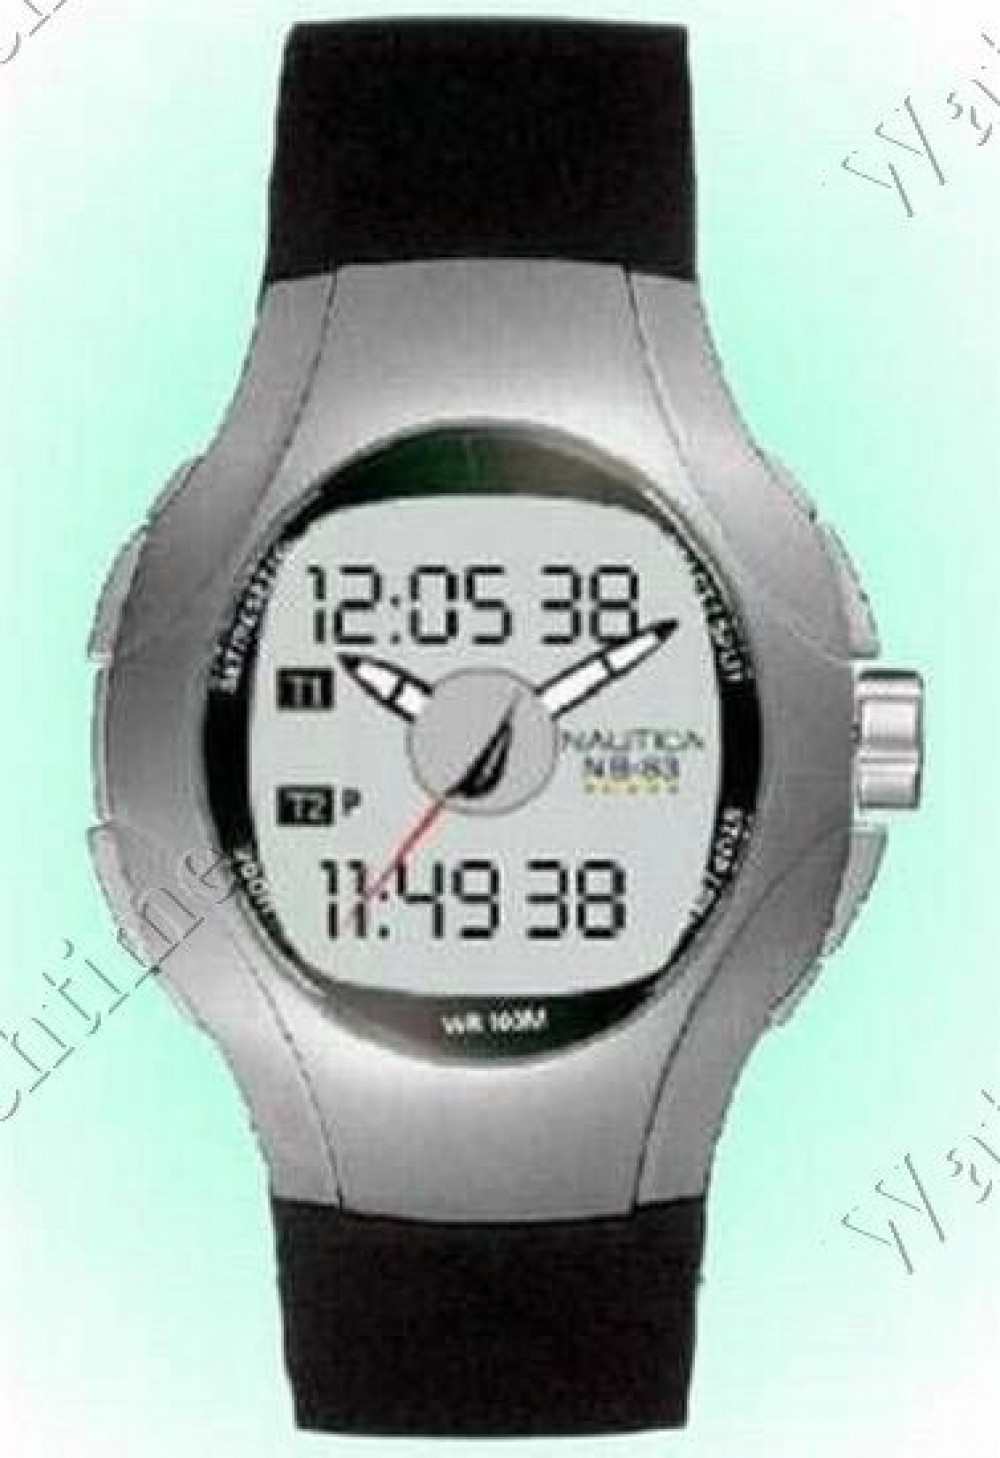 Zegarek firmy Nautica Watches, model Challenge Nautica NS-83